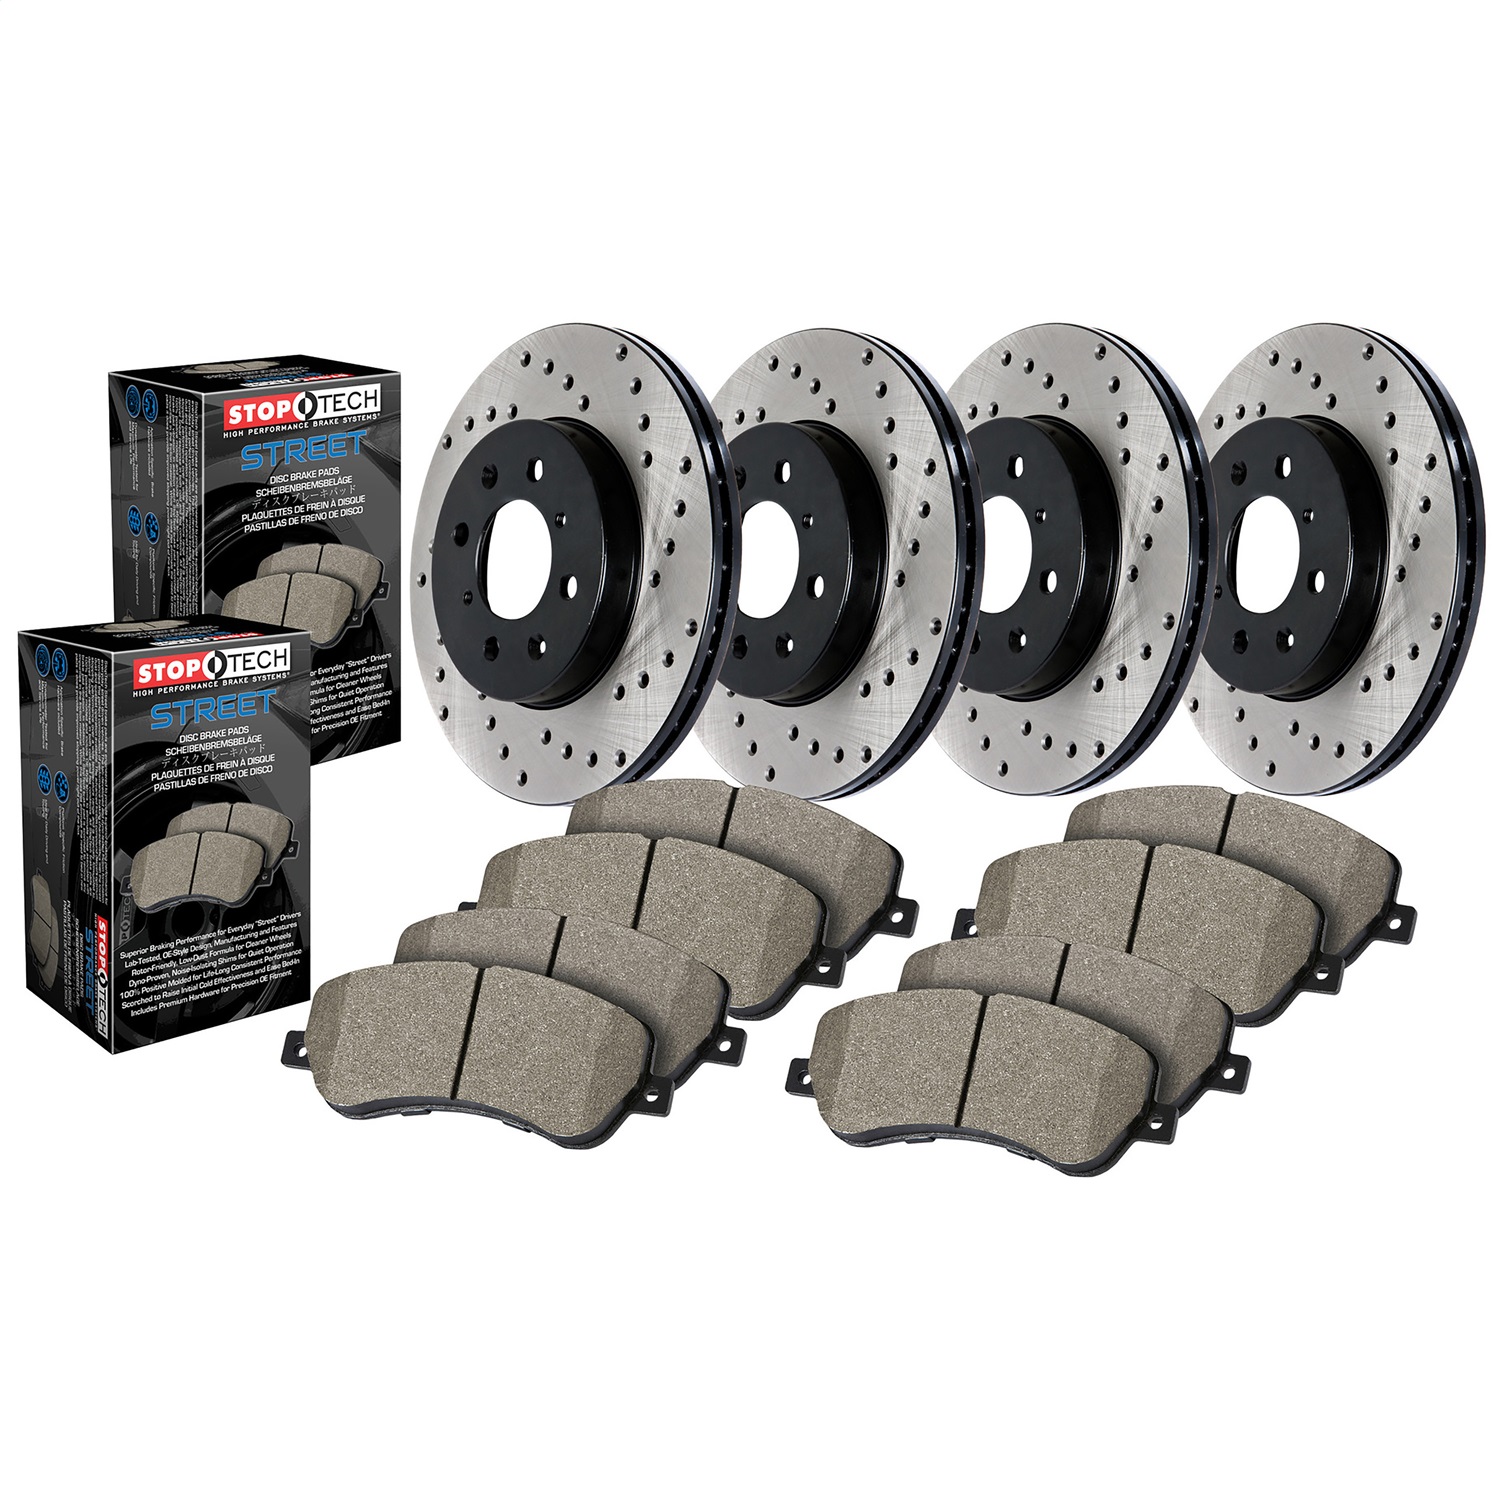 StopTech 936.47021 Street - 4 Wheel Disc Brake Kit w/Cross-Drilled Rotor